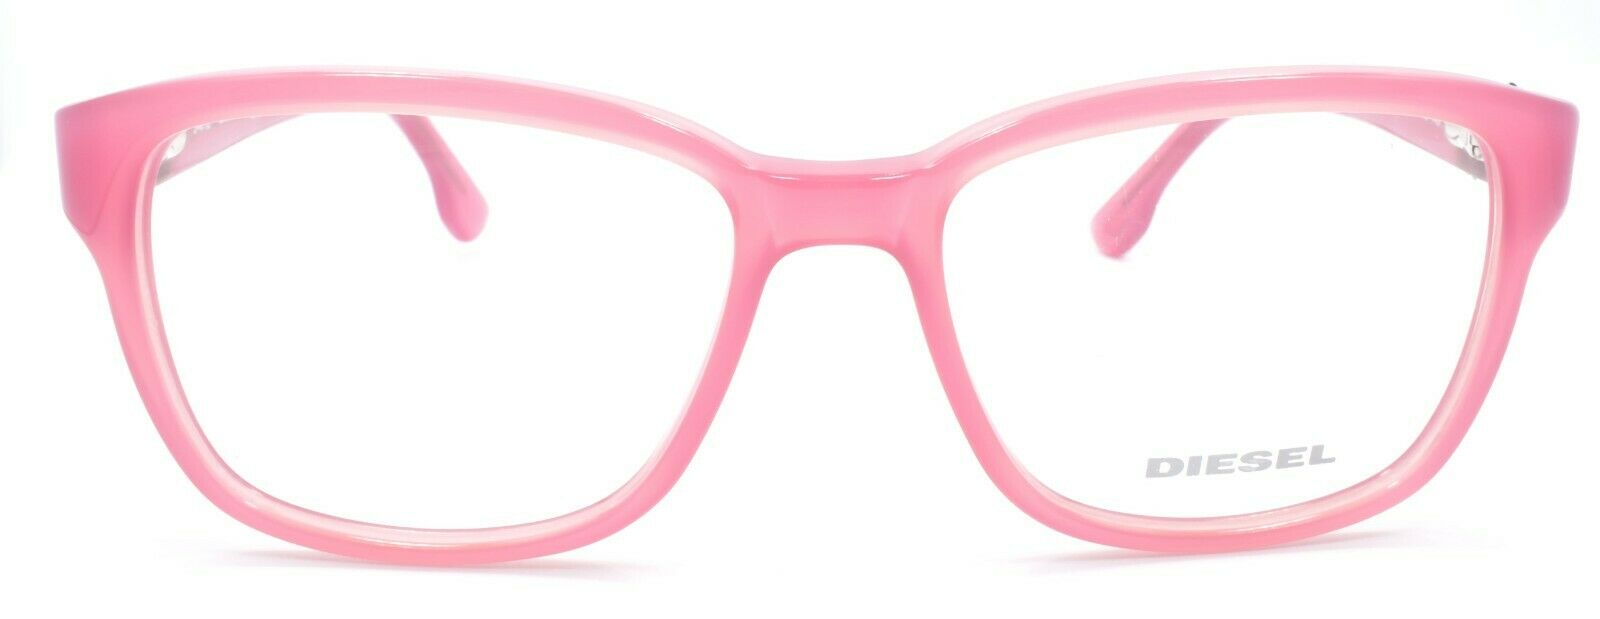 2-Diesel DL5032 081 Women's Eyeglasses Frames 51-16-140 Pink / Blue Denim-664689584451-IKSpecs